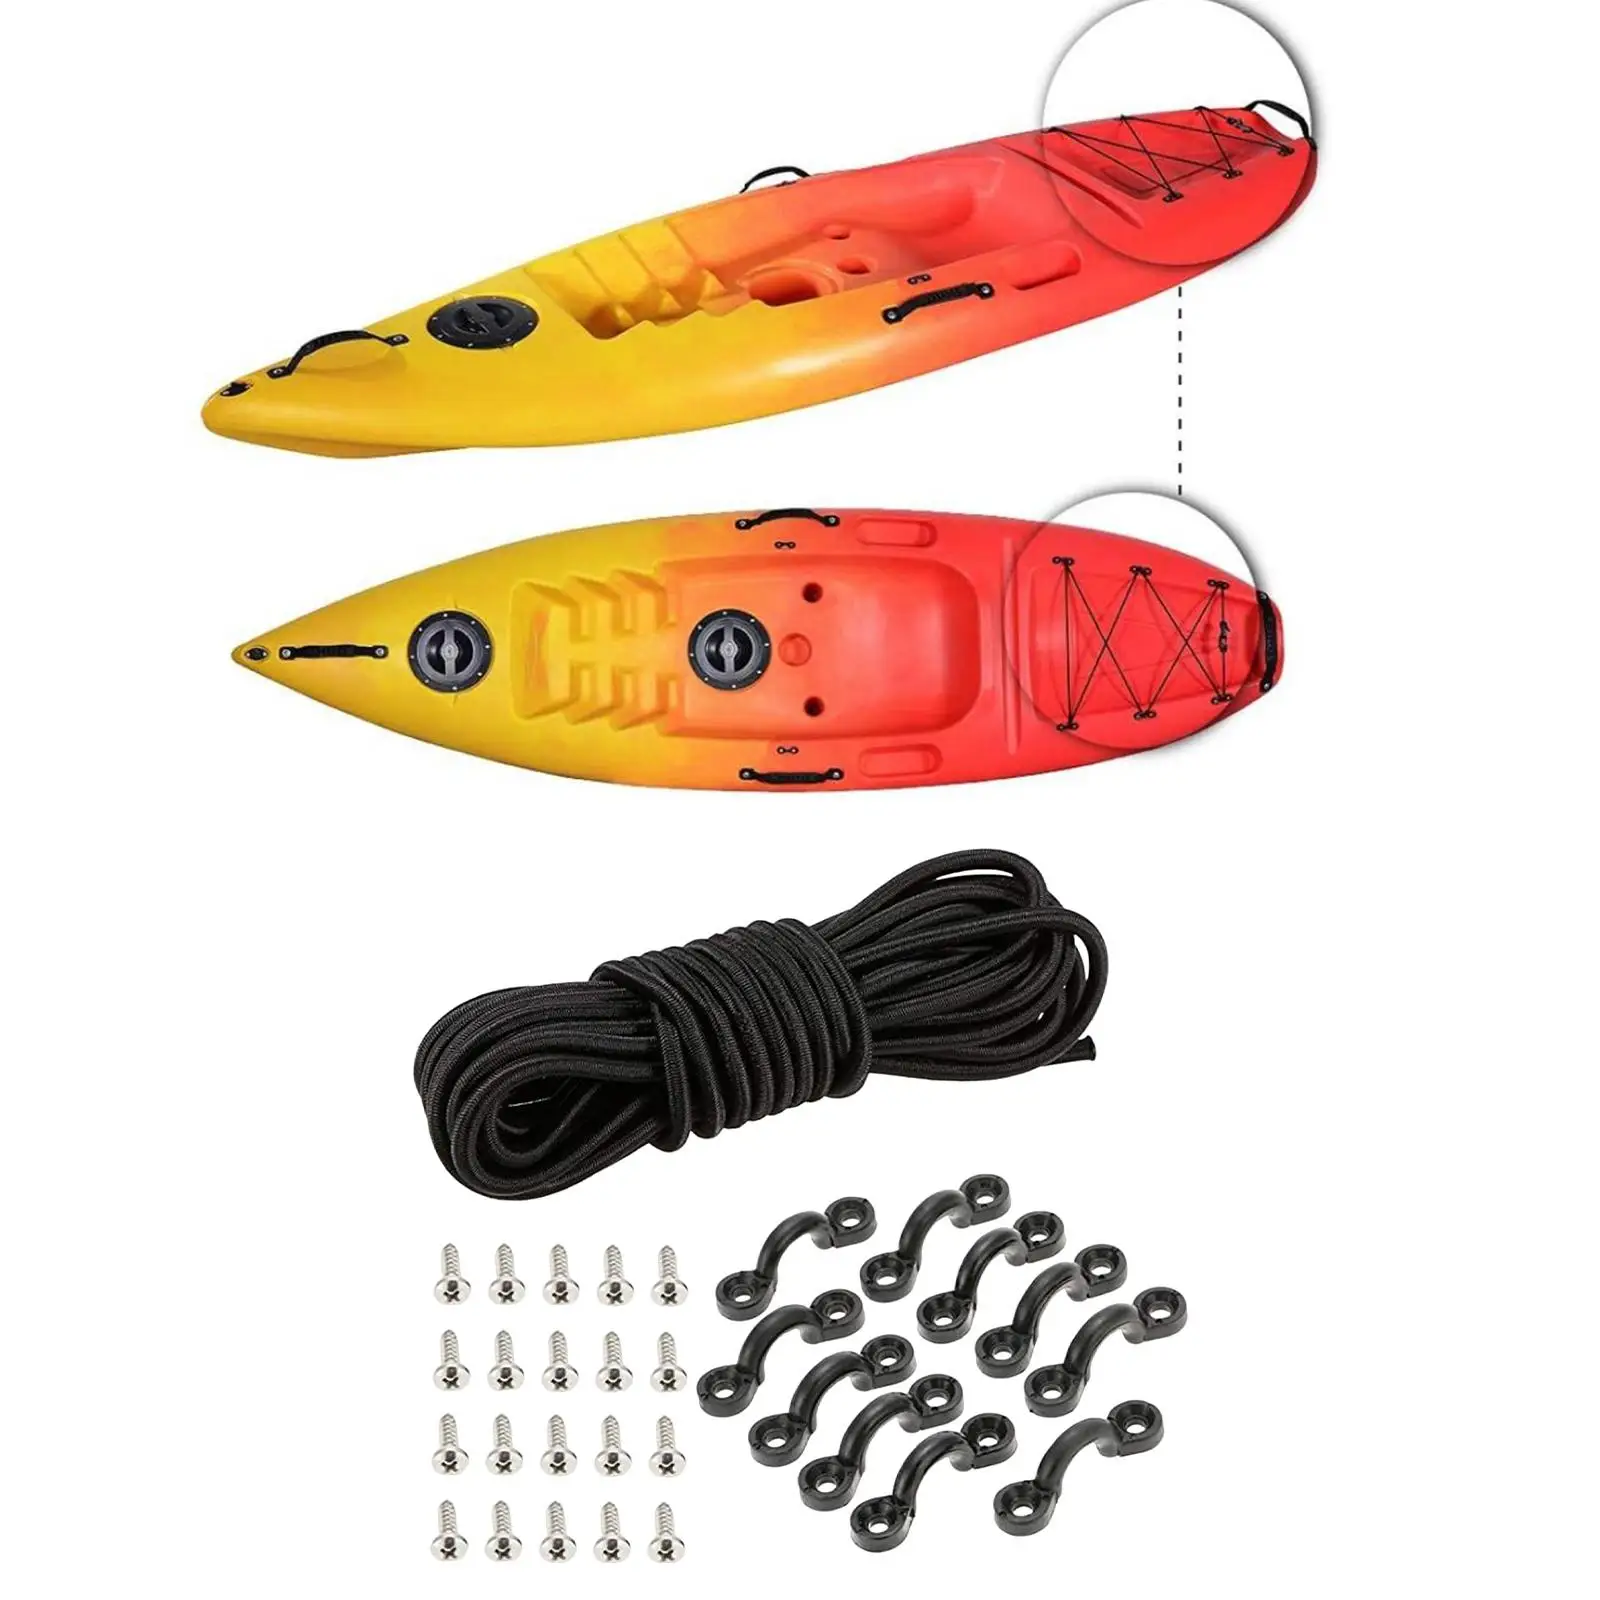 Kayak Deck Rigging Kit 16.4 Feet  Cord 10Pcs C Shaped Buckles Fishing Storage  Kit for Canoe Outfitting Fishing Camping Boat